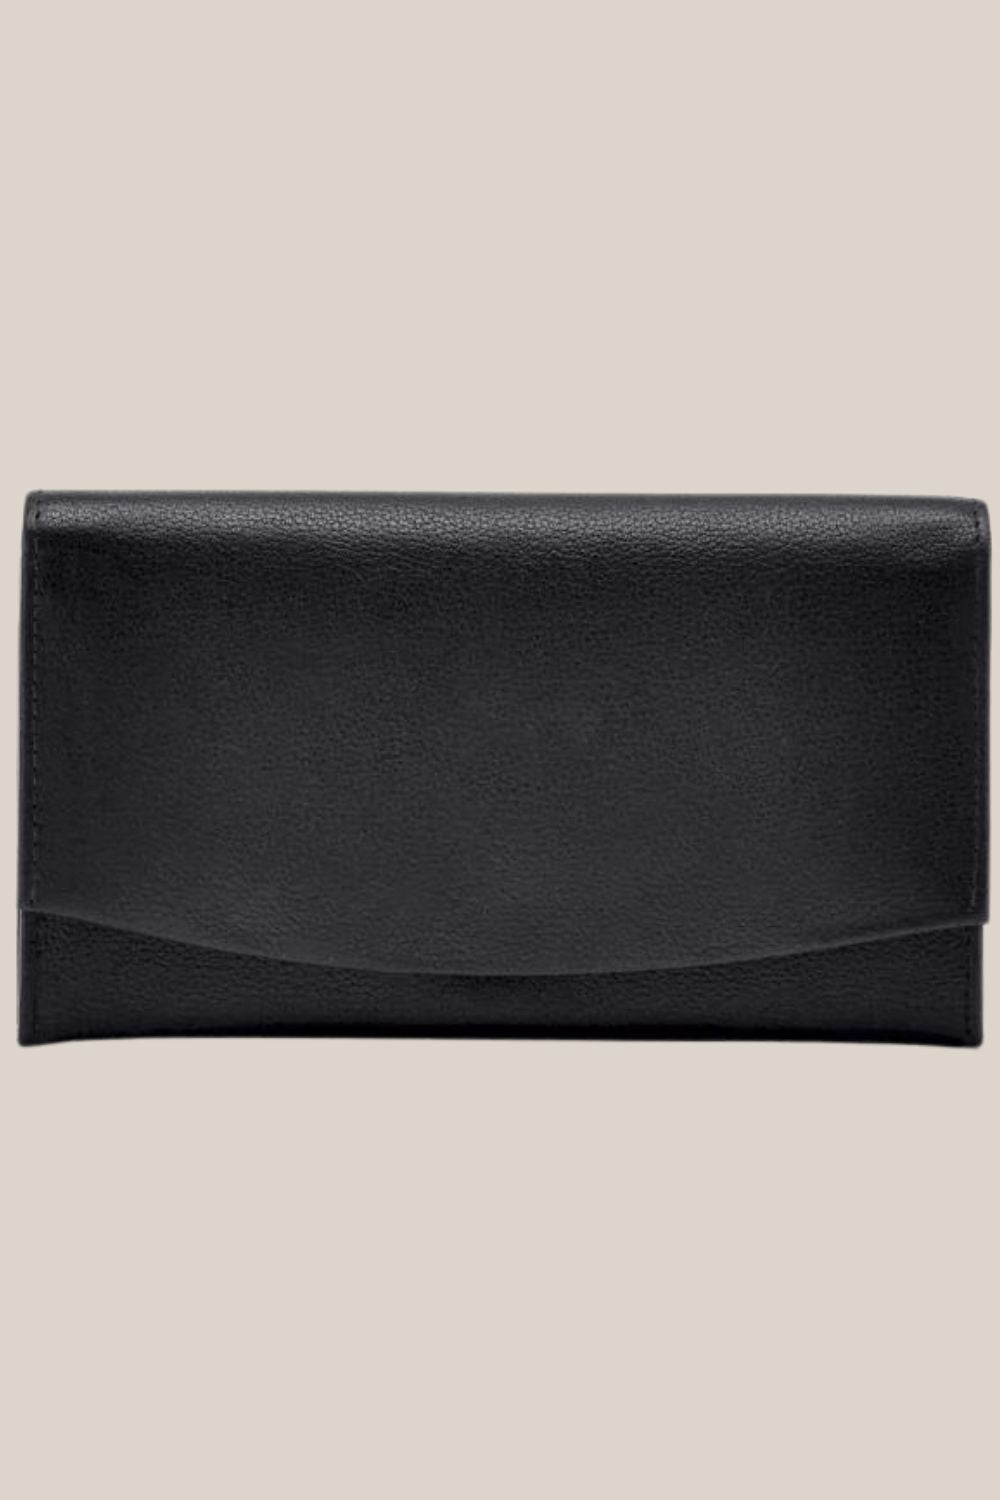 Cobb & Co Erina Ladies Leather Wallet